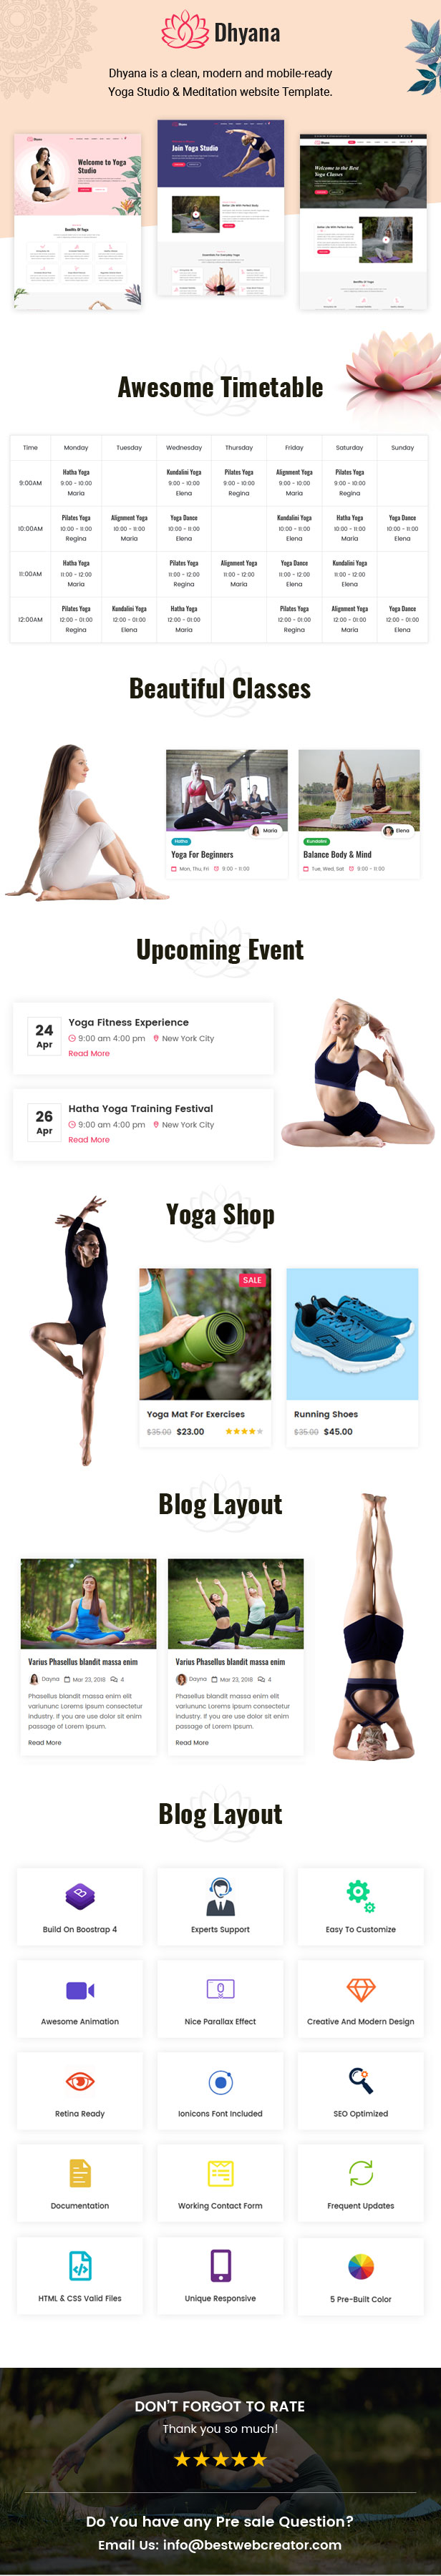 Dhyana Fitness Yoga Studio Meditation HTML Template